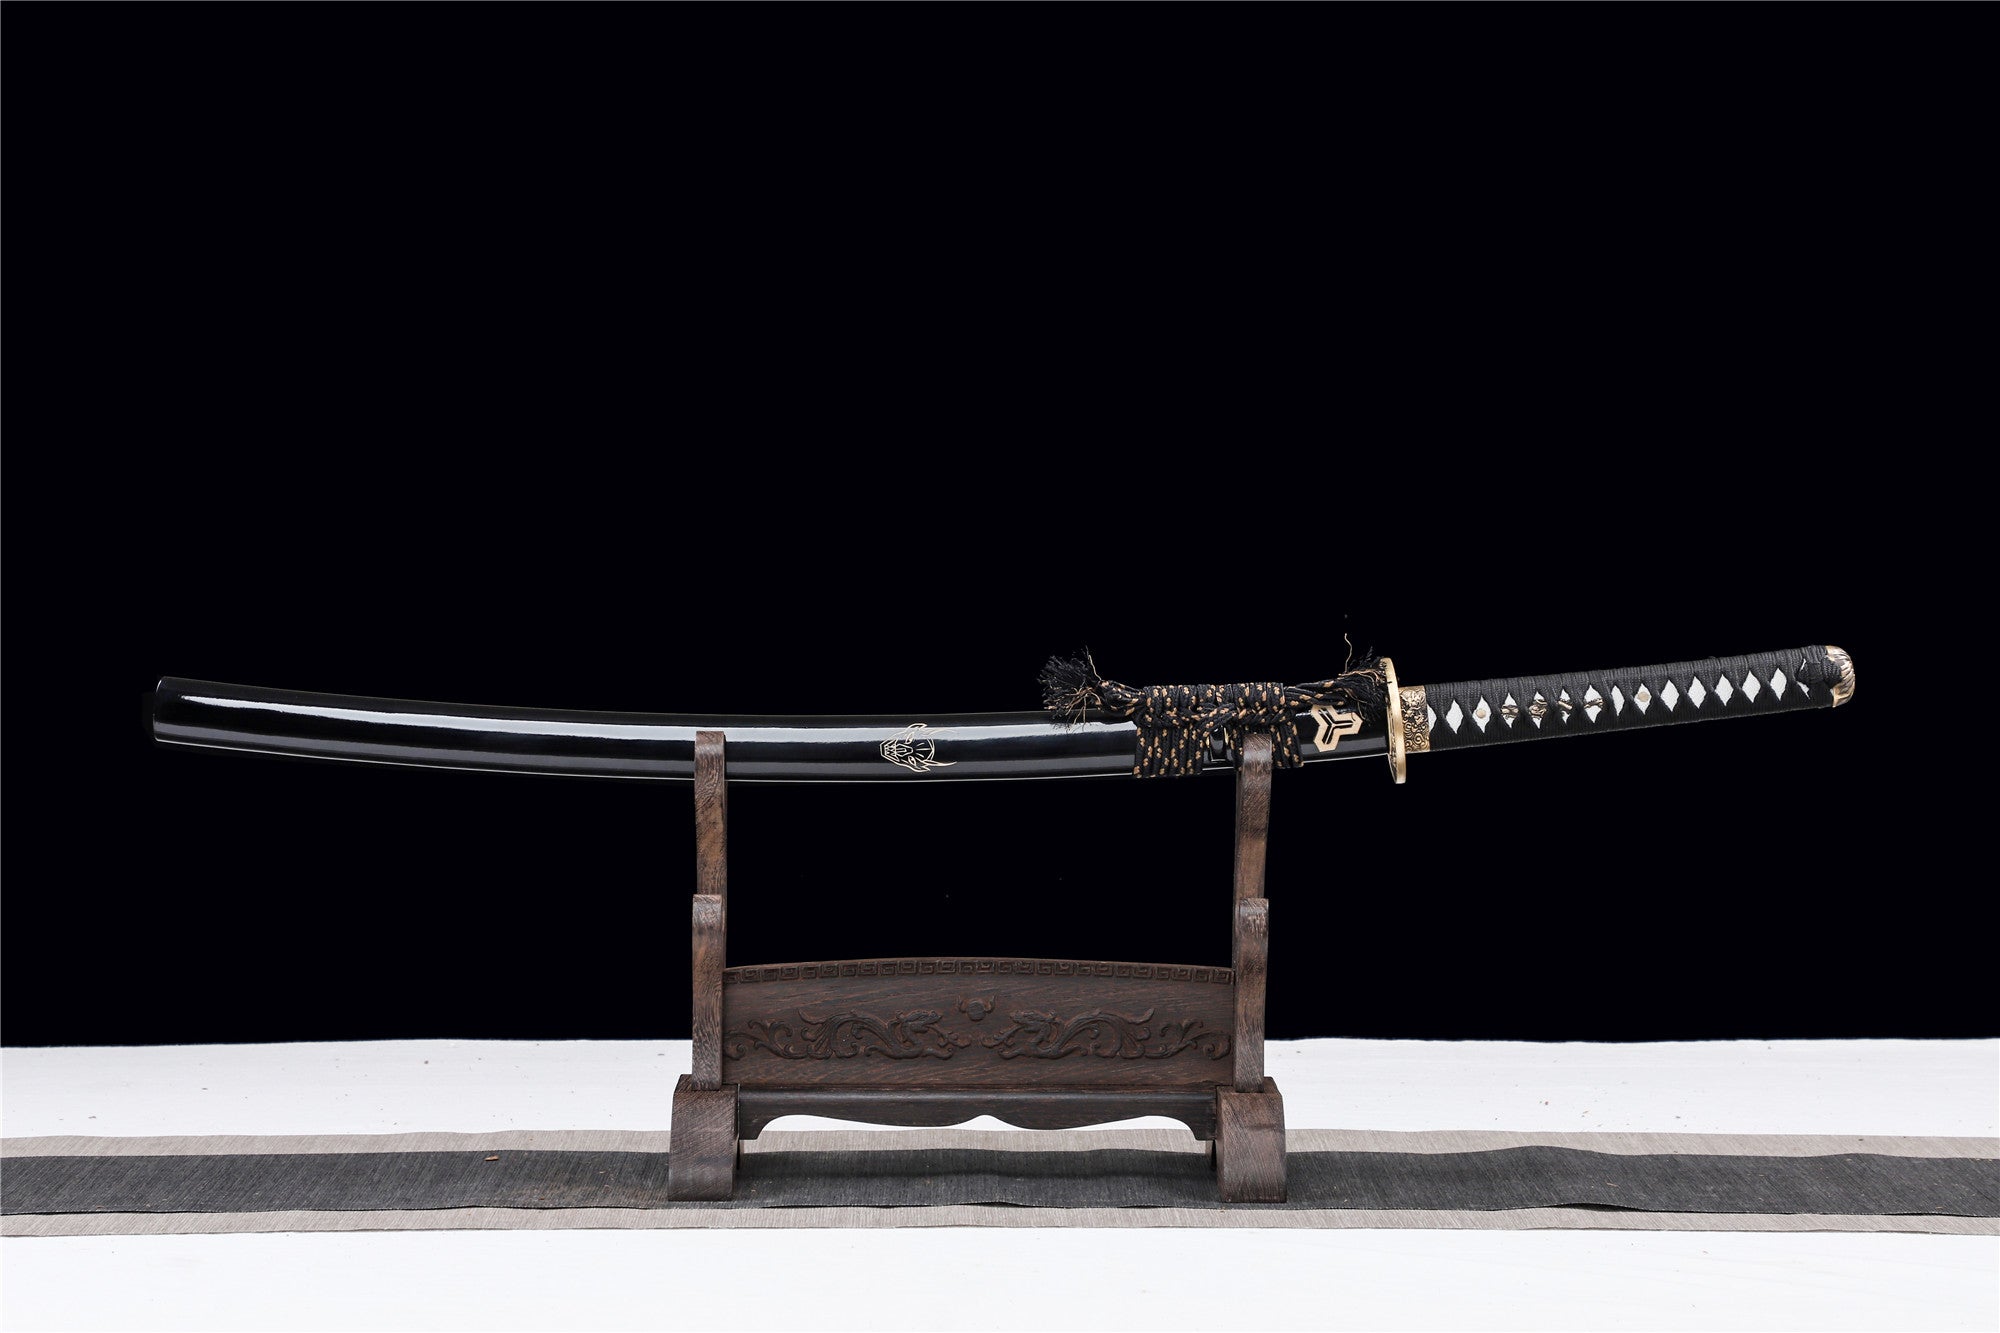 Demon Katana Sword,Devil Series,Japanese Samurai Sword,Real Handmade Katana,Damascus Steel